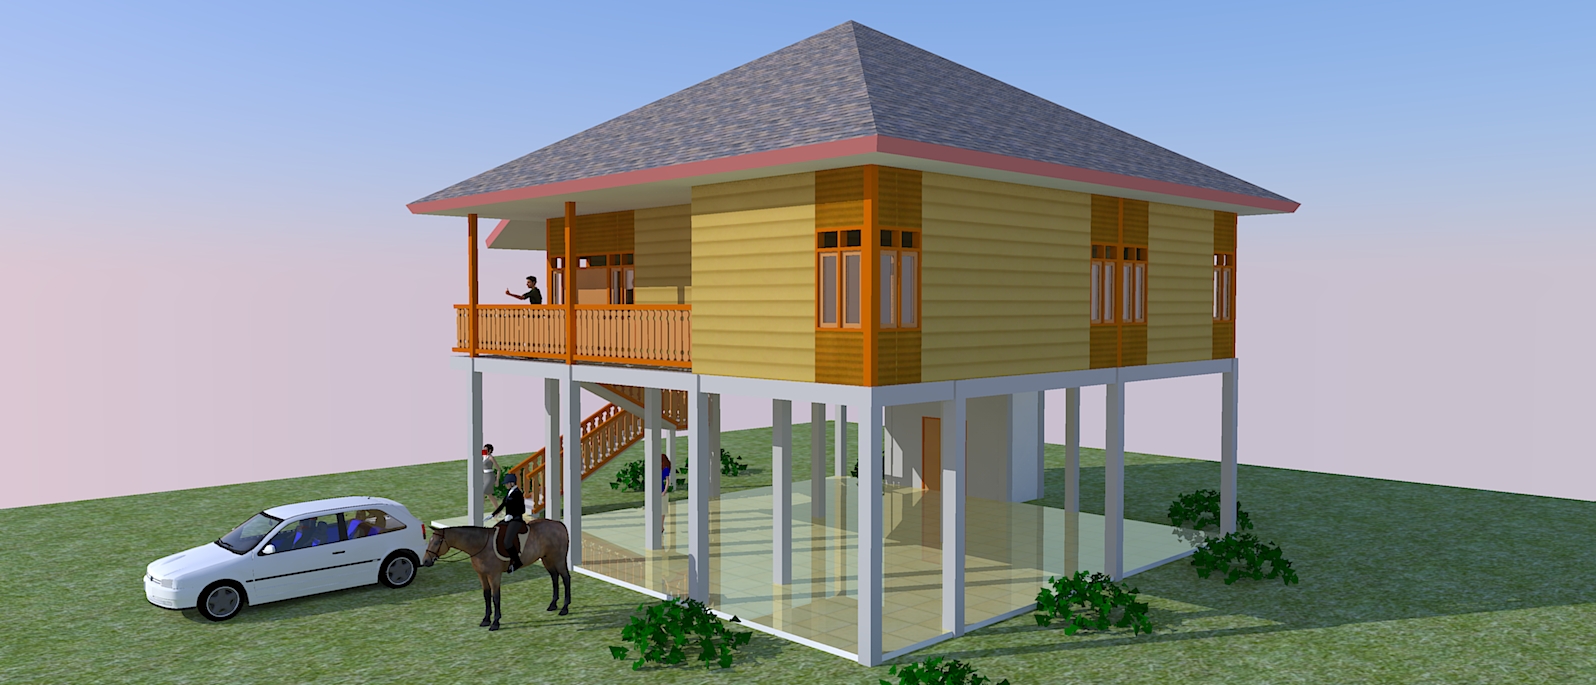 Plan Rumah Kayu Kampung Design Rumah Terkini